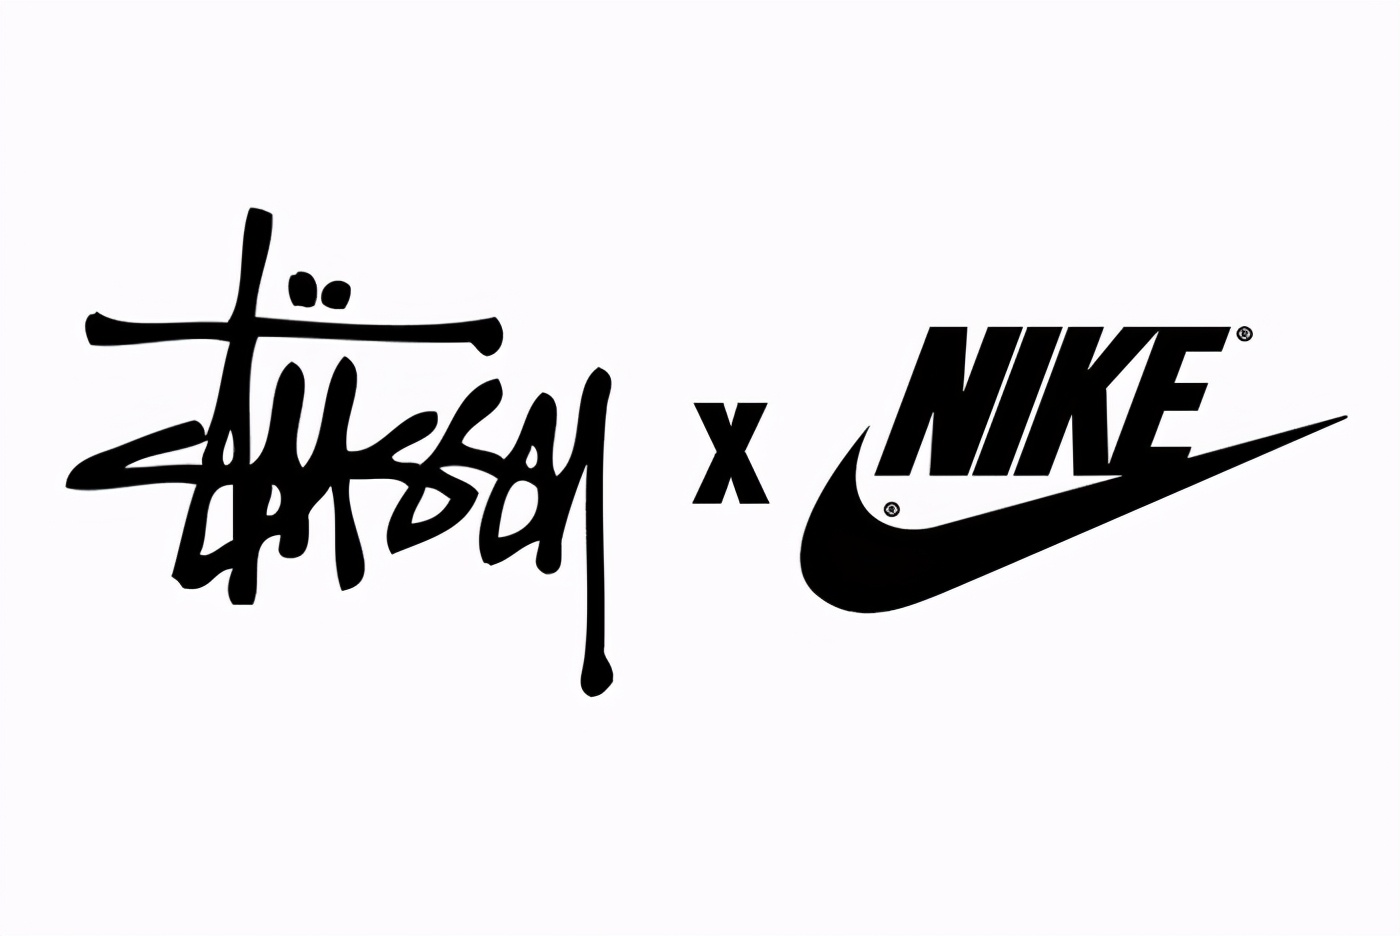 Nike曝光新鞋极似Stussy联名版本！颜值秒杀你脚上那双